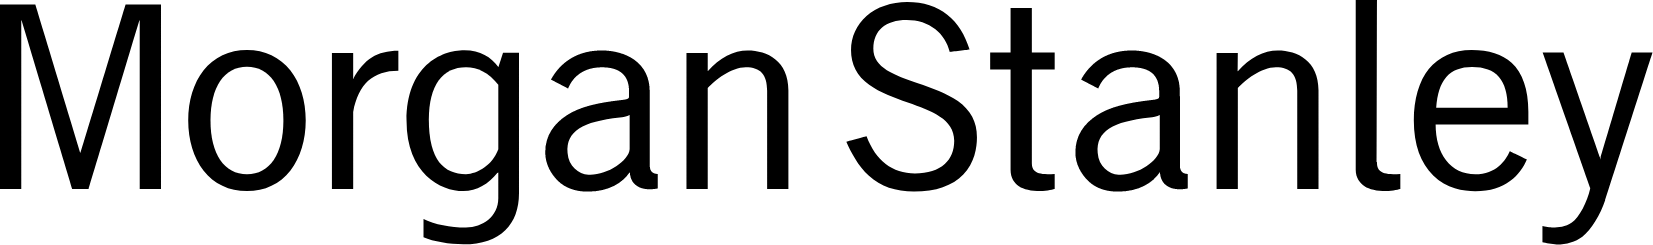 Morgan Stanley logo large (transparent PNG)